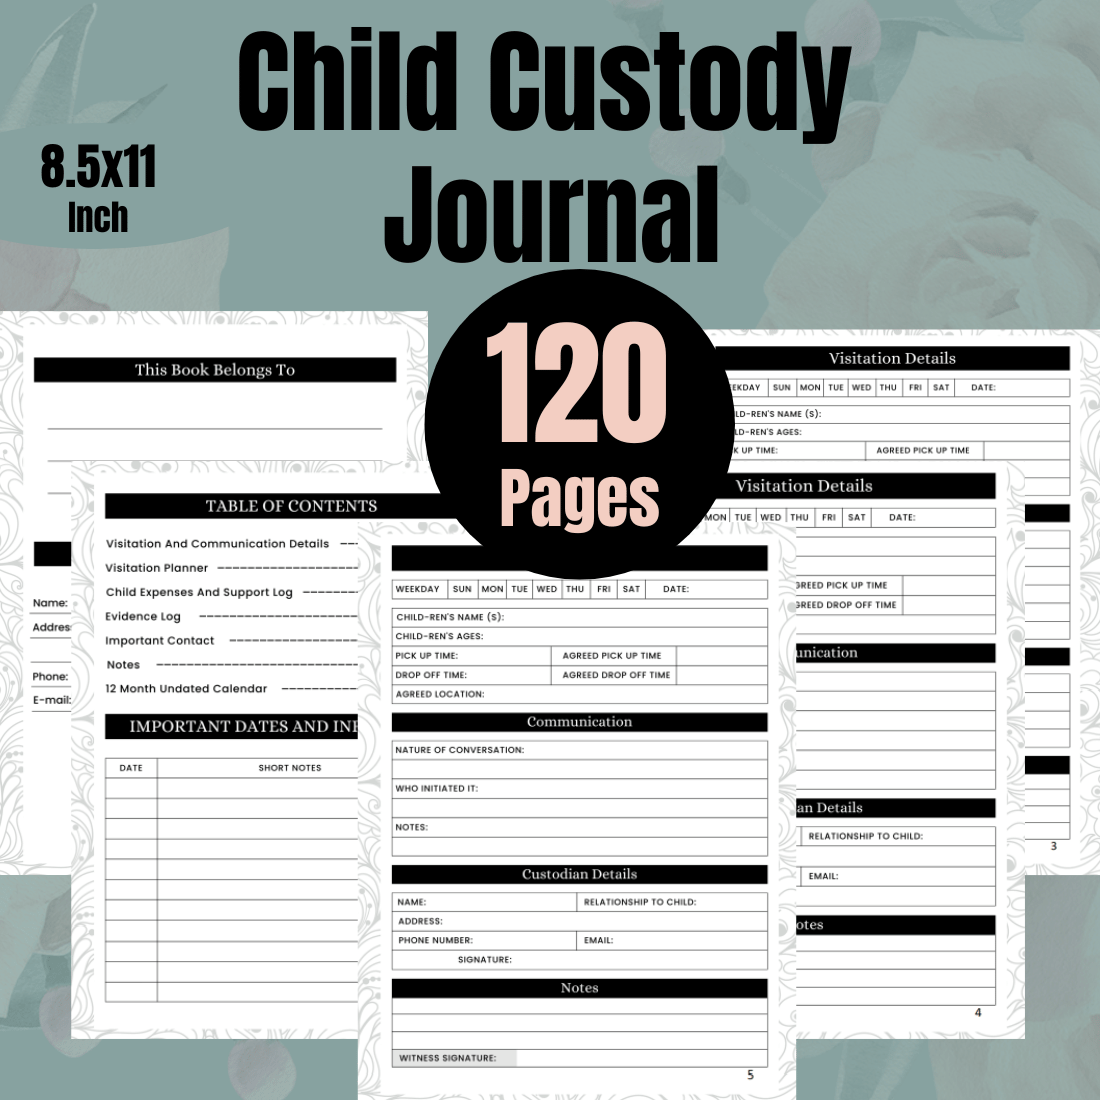 Child Custody Journal KDP Interior main cover